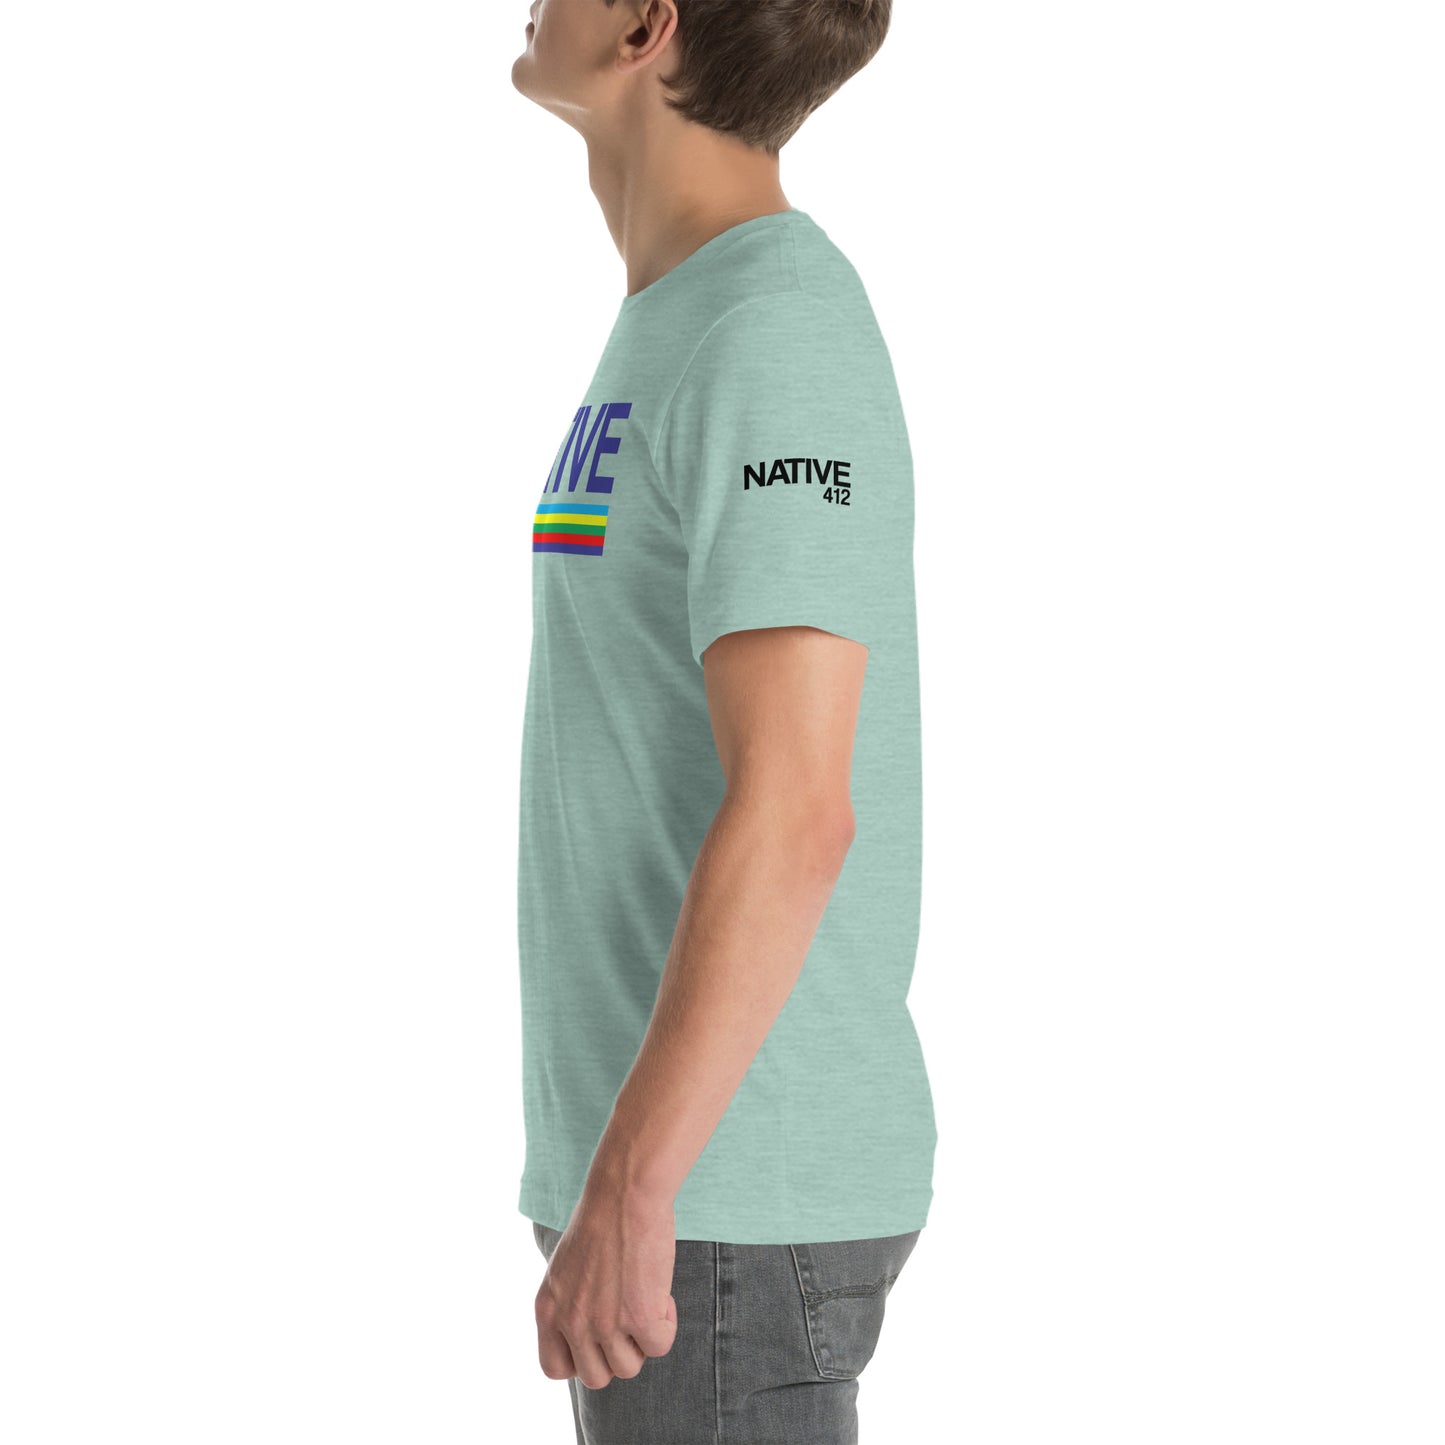 Native Classic Colors Unisex t-shirt